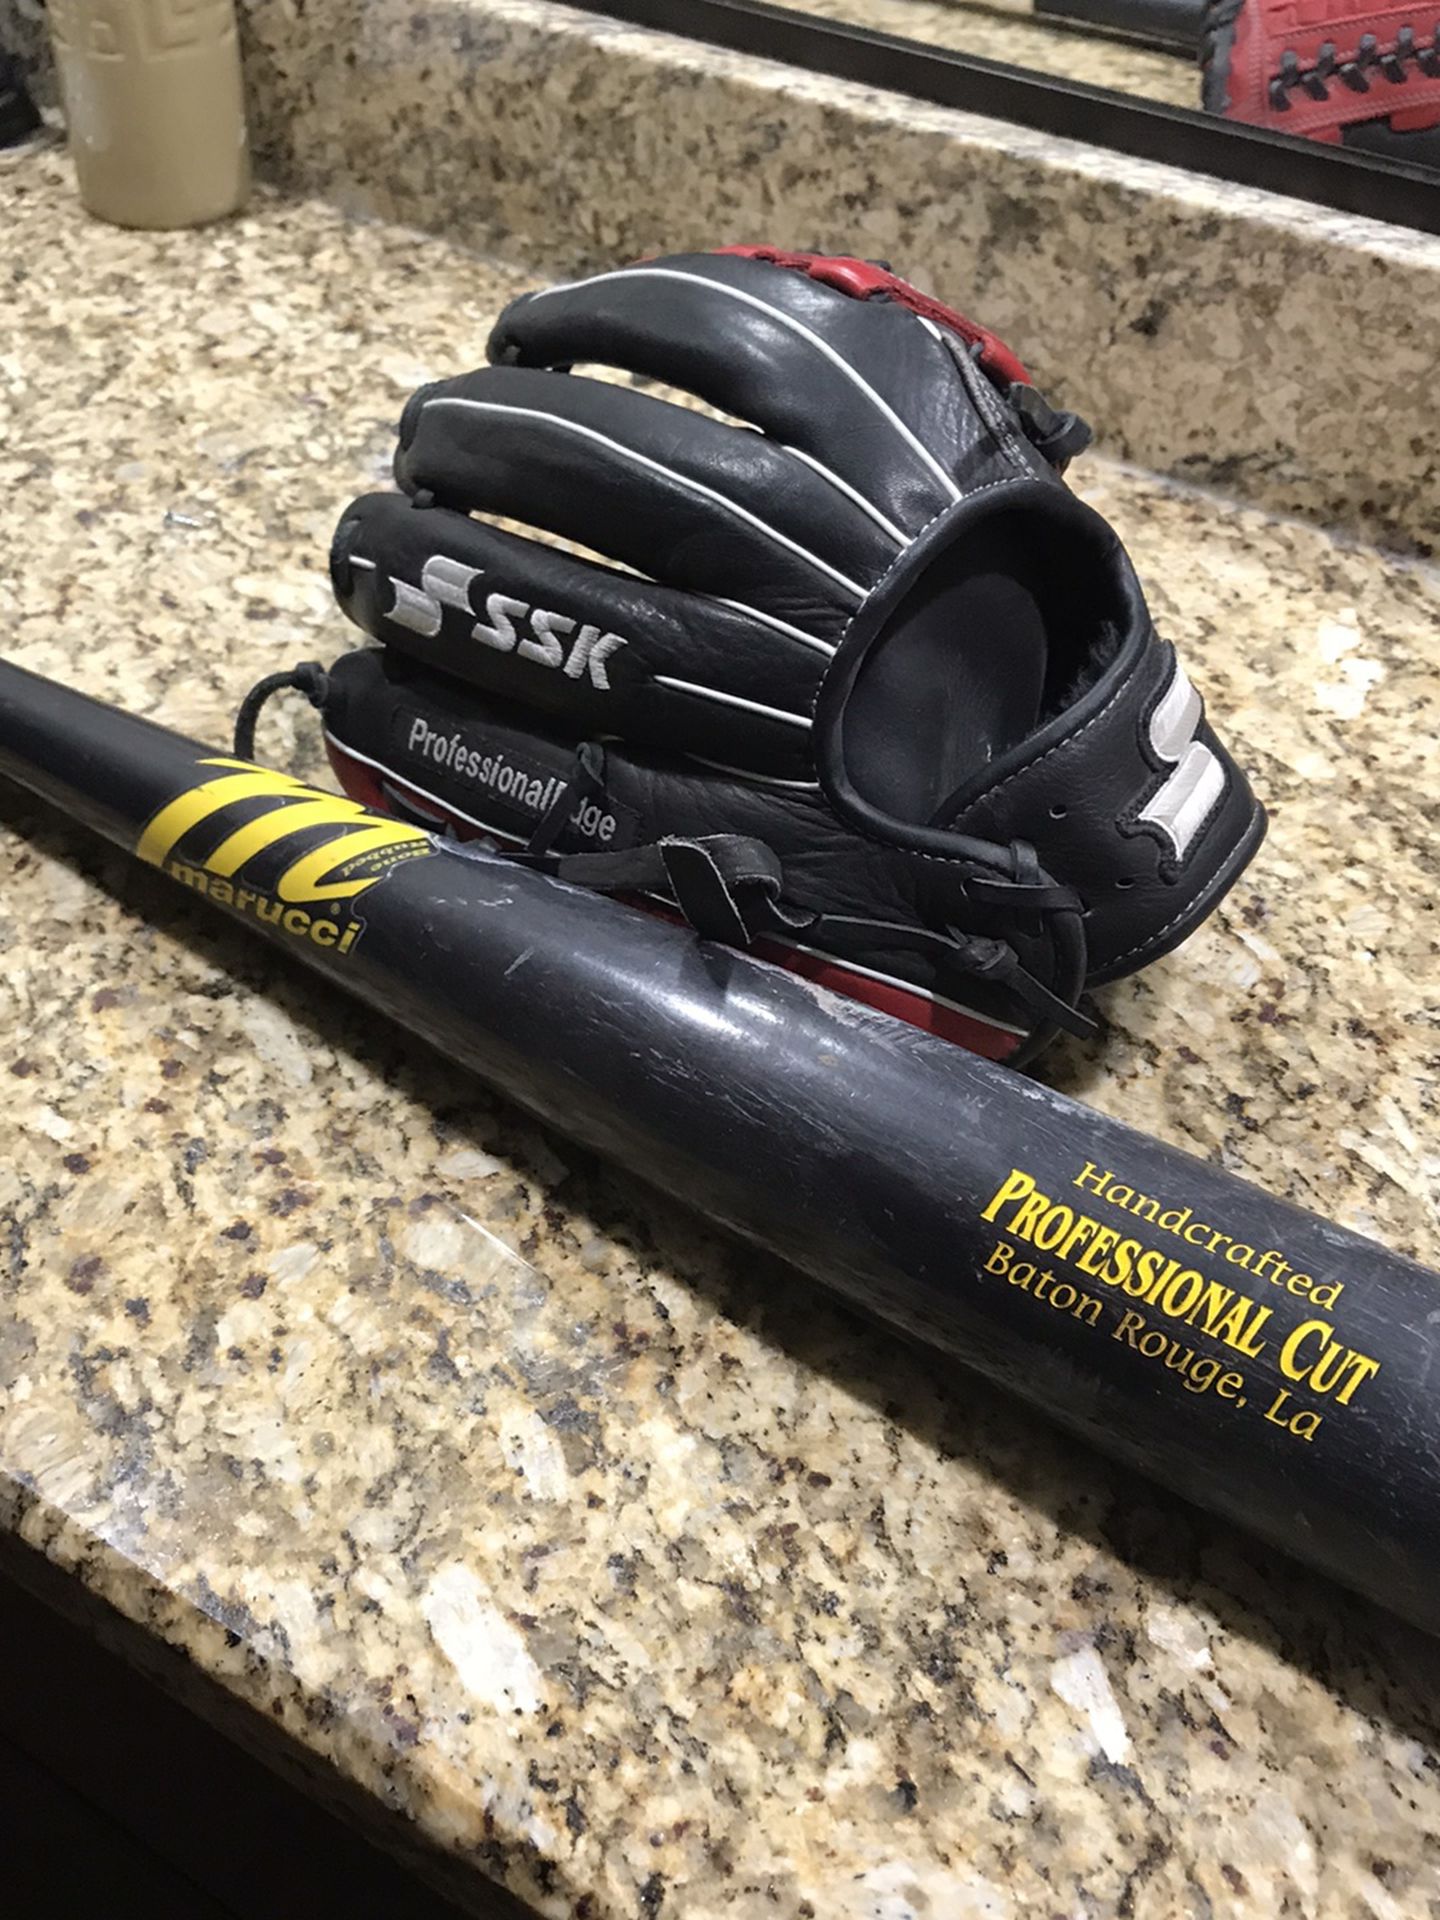 Marucci #3 Baseball Bat And A SSK Professional Baseball Glove